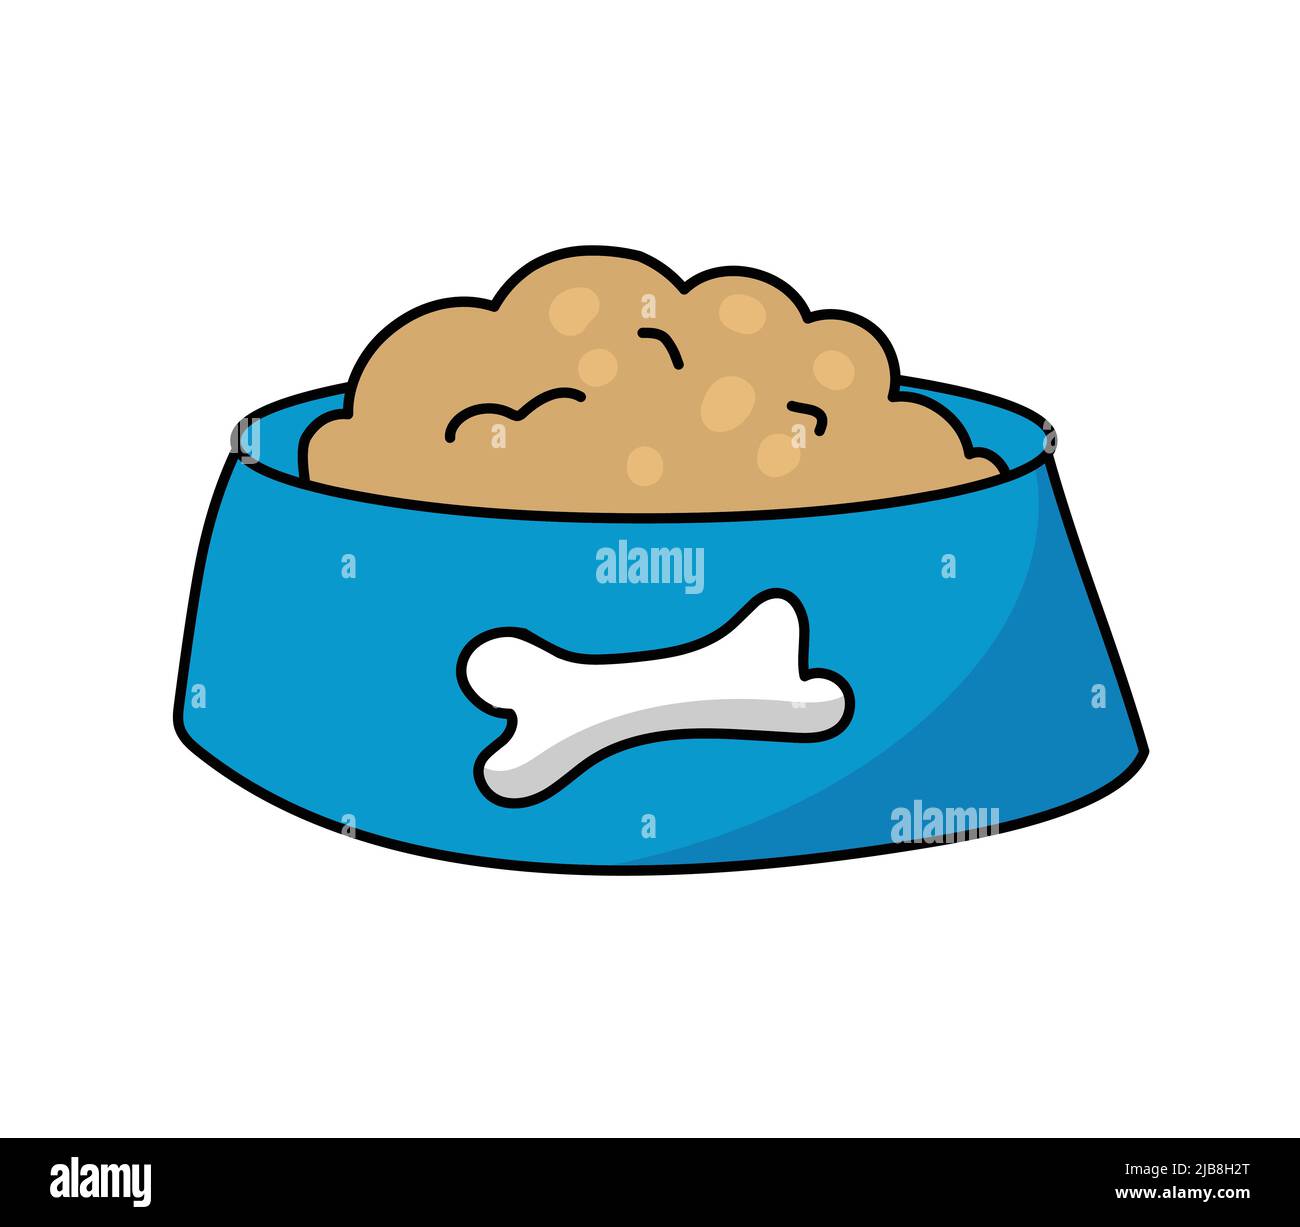 Dog bowl clipart Stock Vector Image & Art - Alamy